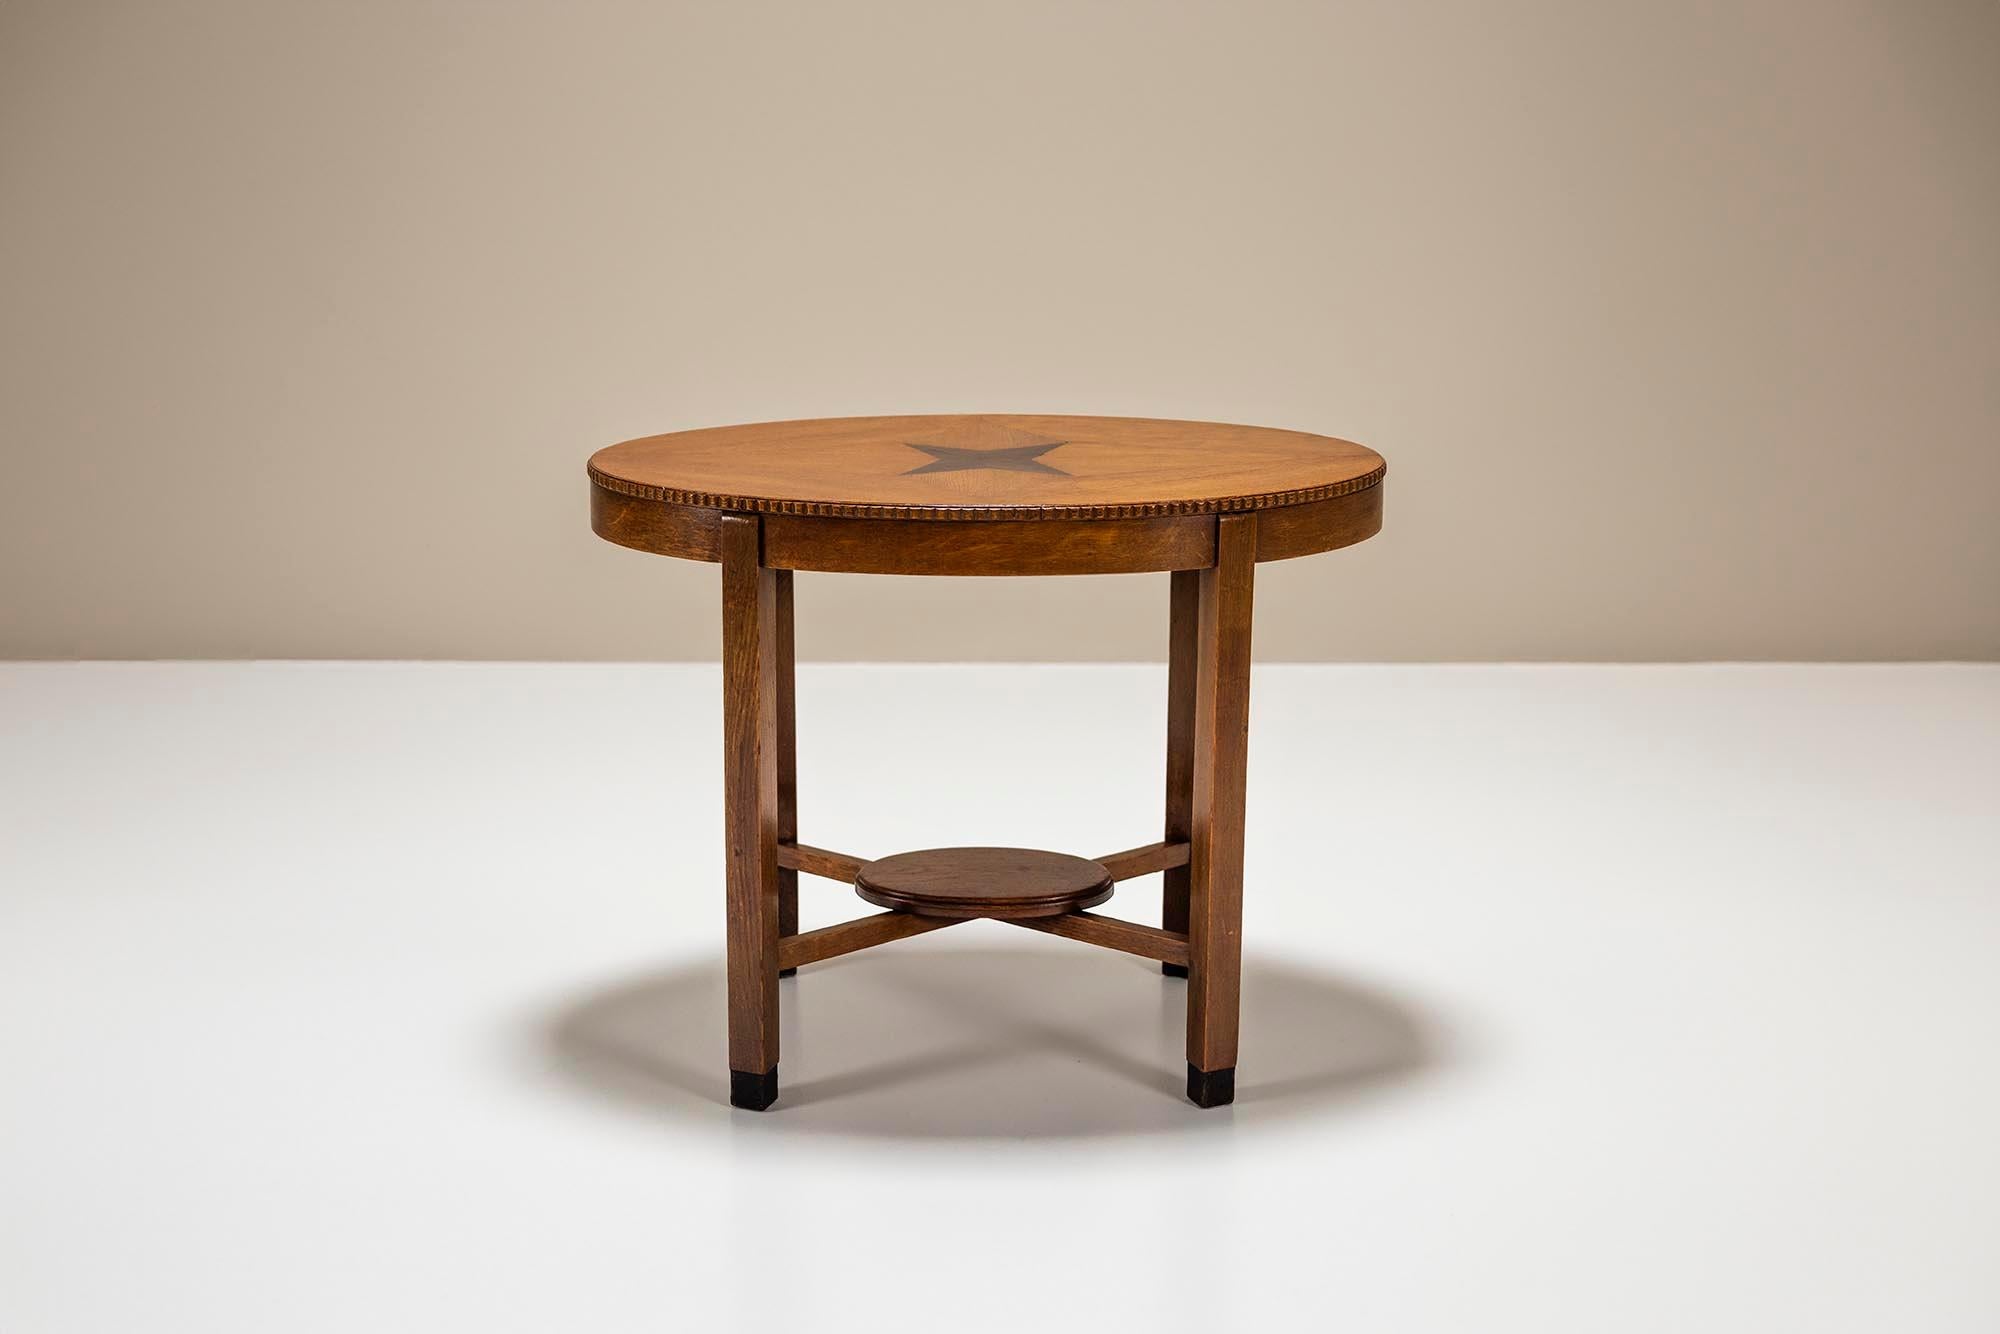 Dutch Oval-shaped Amsterdamse School Side Table in Oak and Ebony, 1930s For Sale